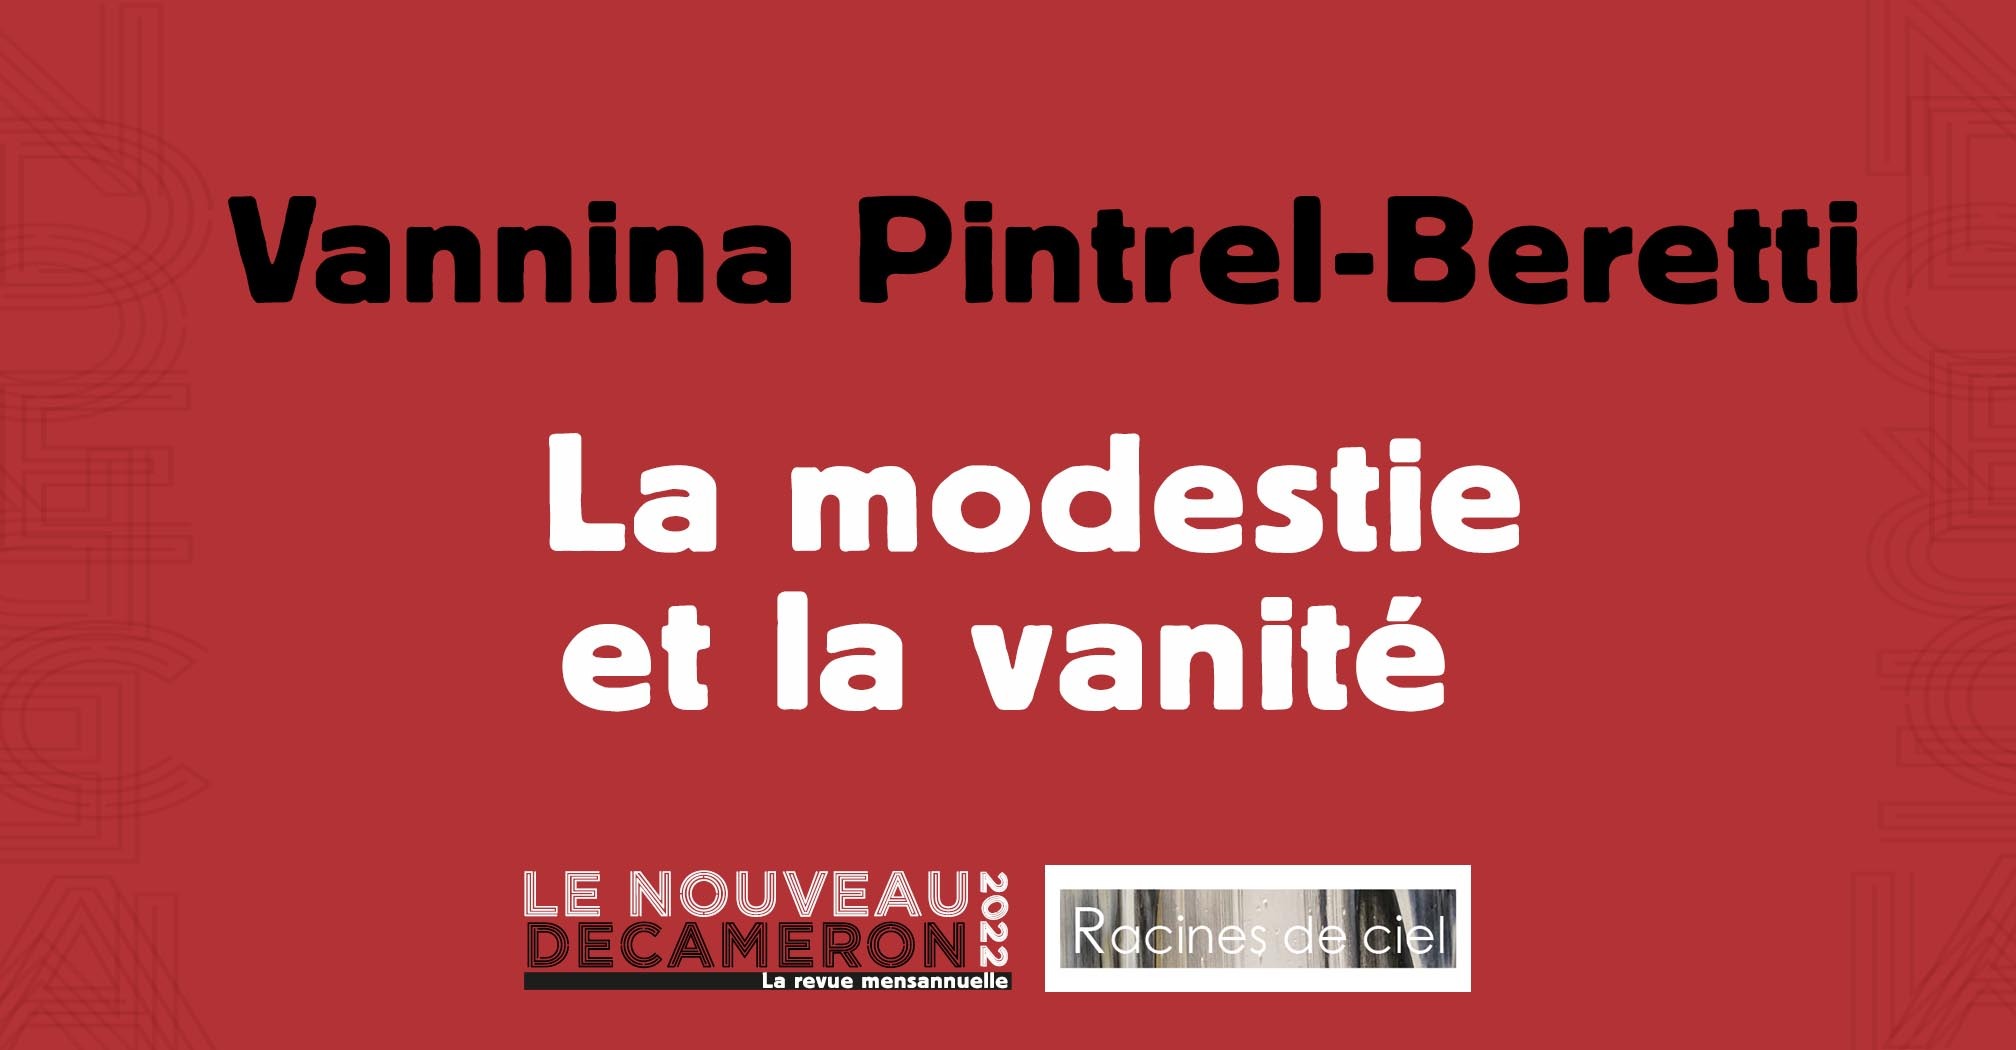 Vannina Pintrel-Beretti - La modestie et la vanité